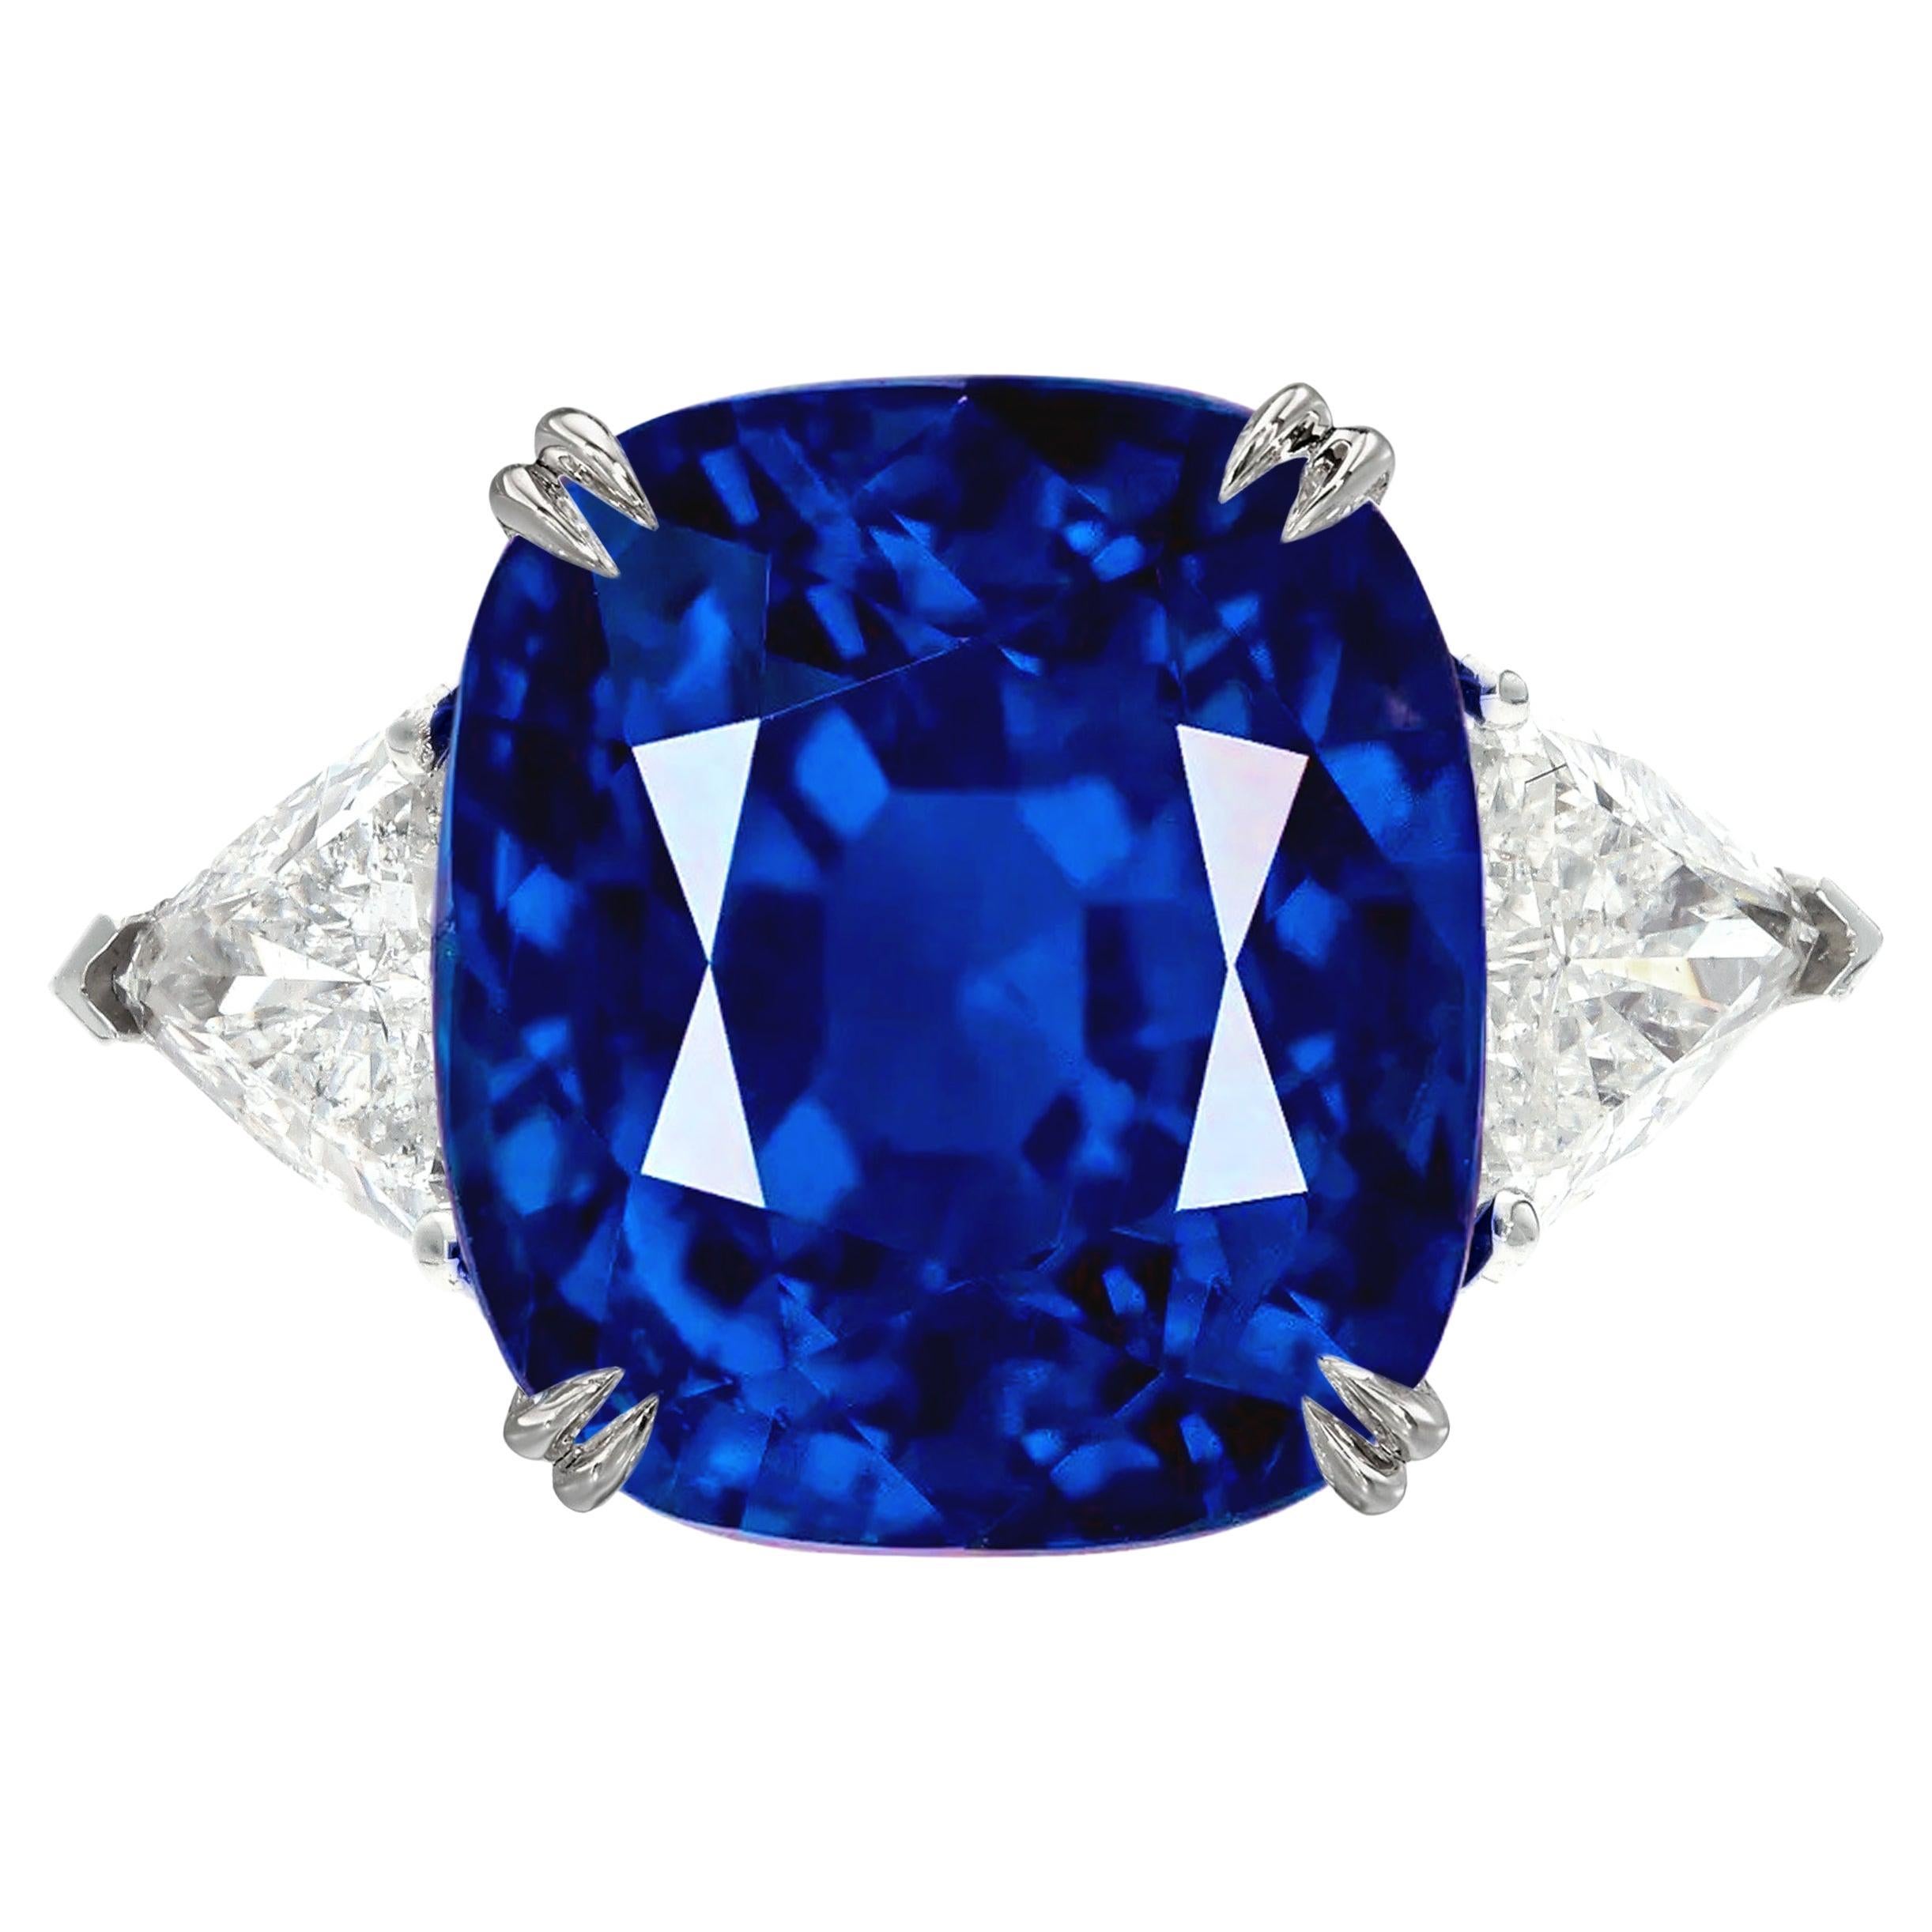 Exceptional GRS Certified 9 Carat Blue Sapphire Burma Origin Diamond Ring For Sale